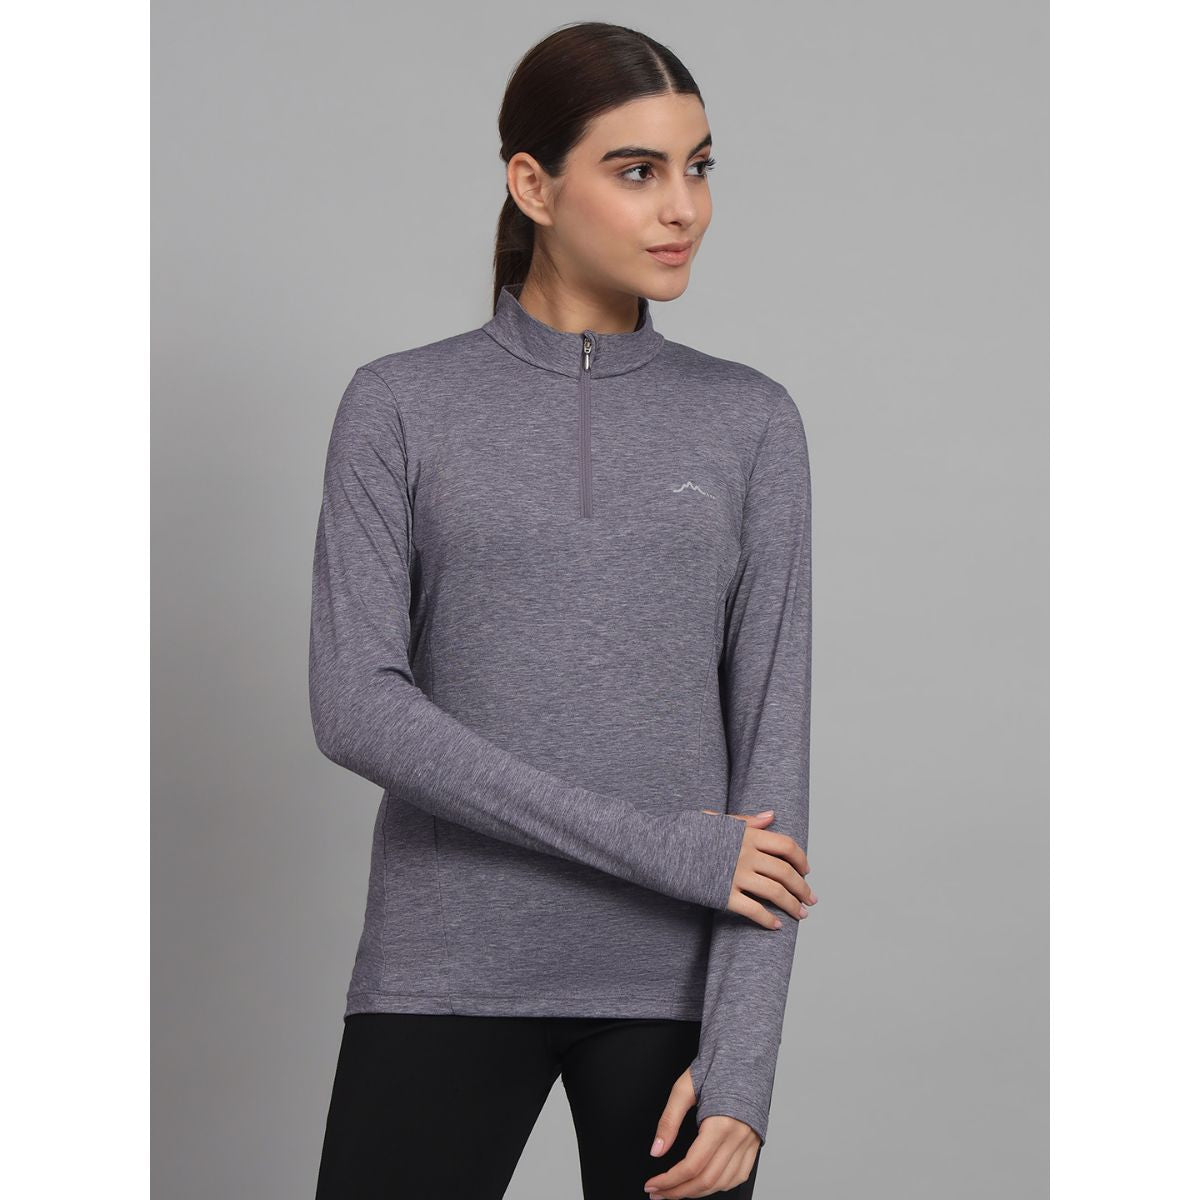 Women's Nomadic Full Sleeves T-Shirt / Baselayer - Purple Gray 1